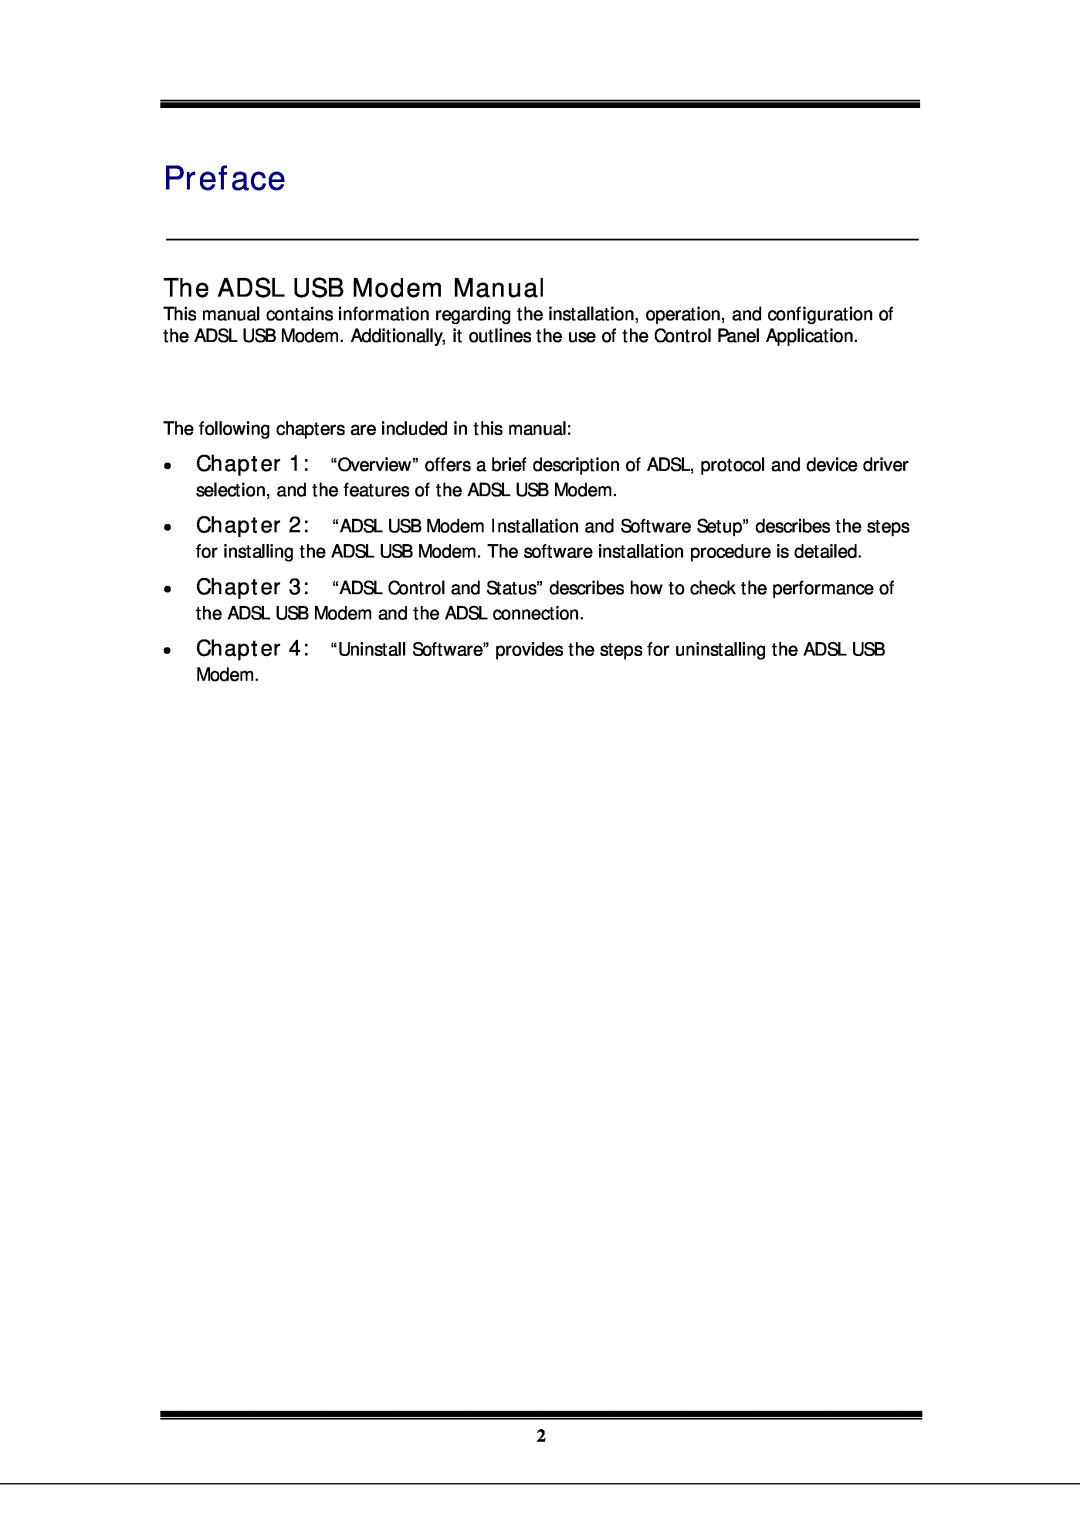 Microsoft EA900 manual Preface, The ADSL USB Modem Manual 